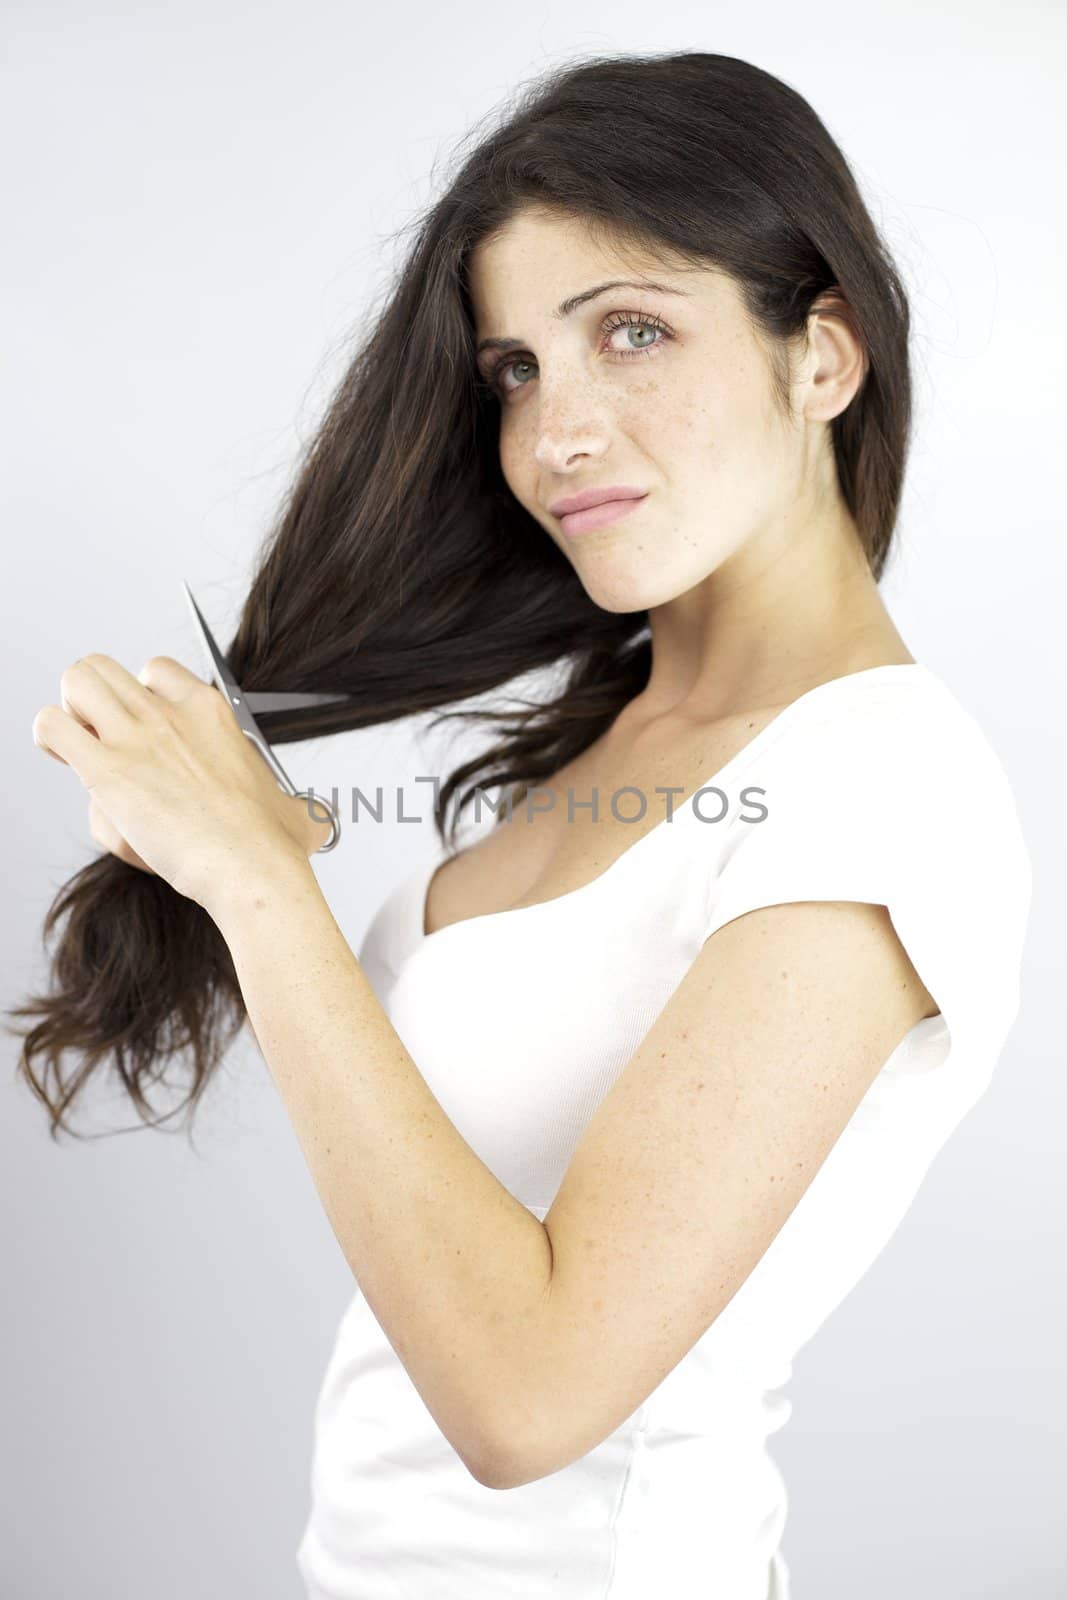 Unhappy girl cutting her long hair by fmarsicano